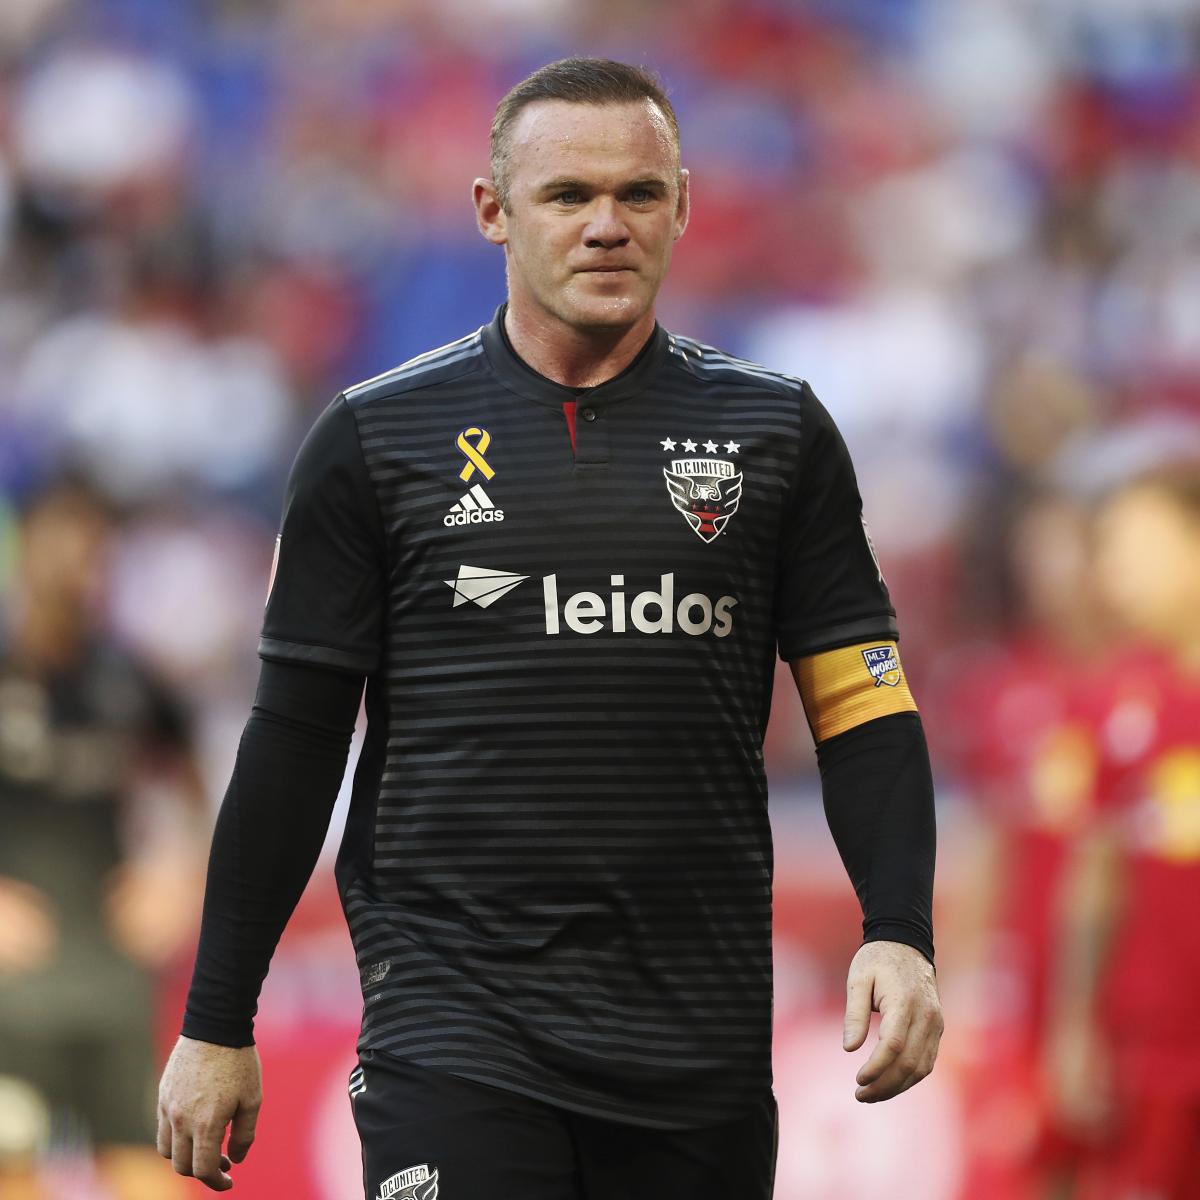 Wayne Rooney - Wayne Rooney wants Man United return with aim to take